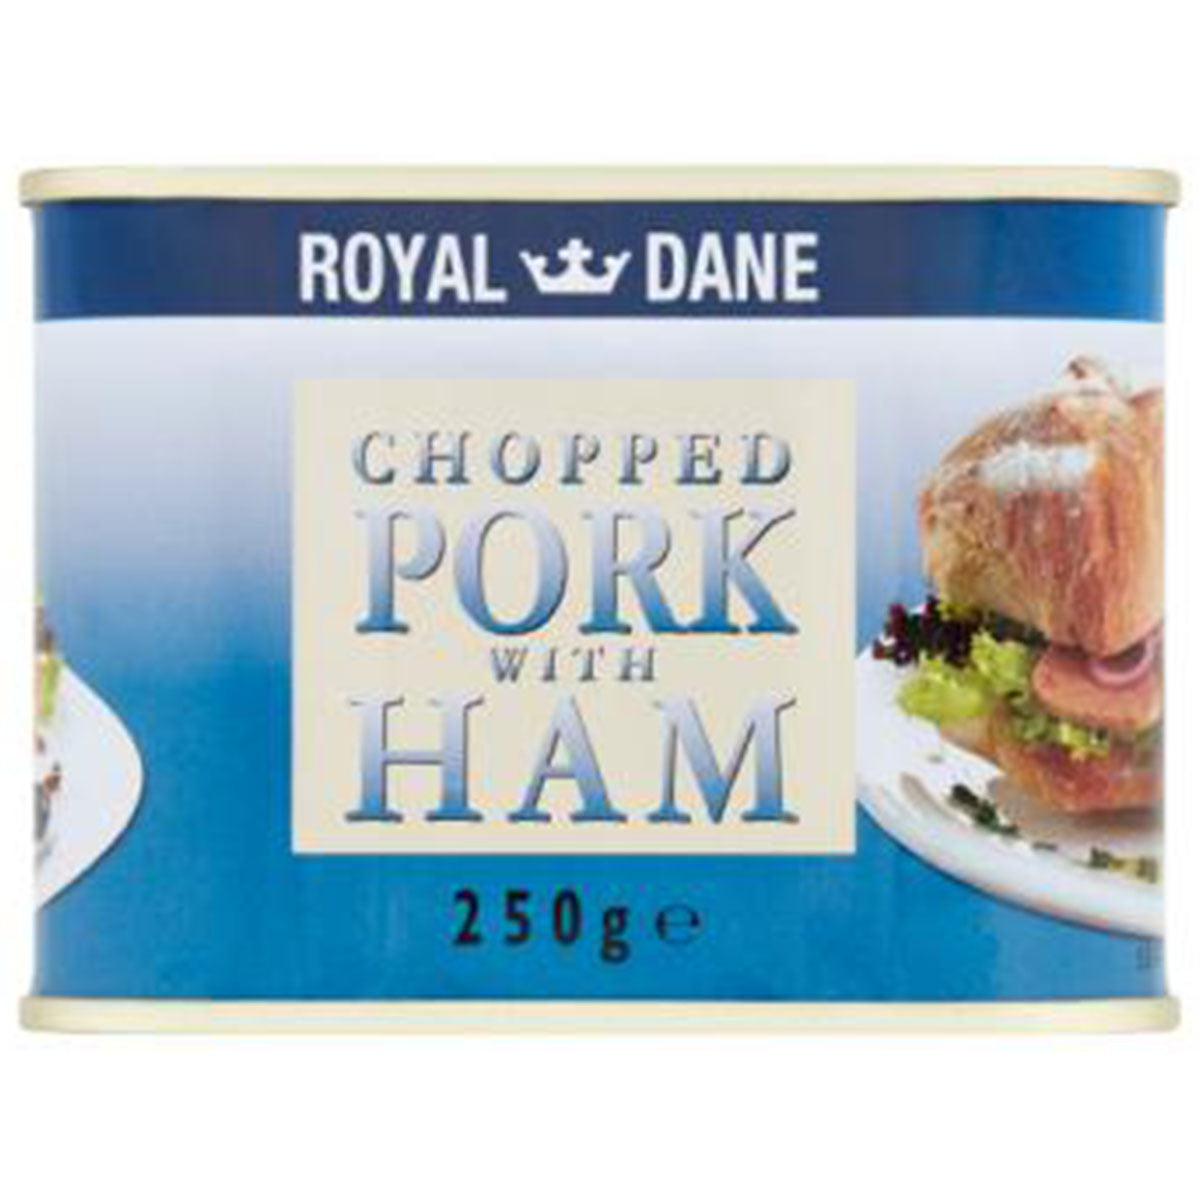 Royal Dane - Chopped Pork with Ham - 250g - Continental Food Store